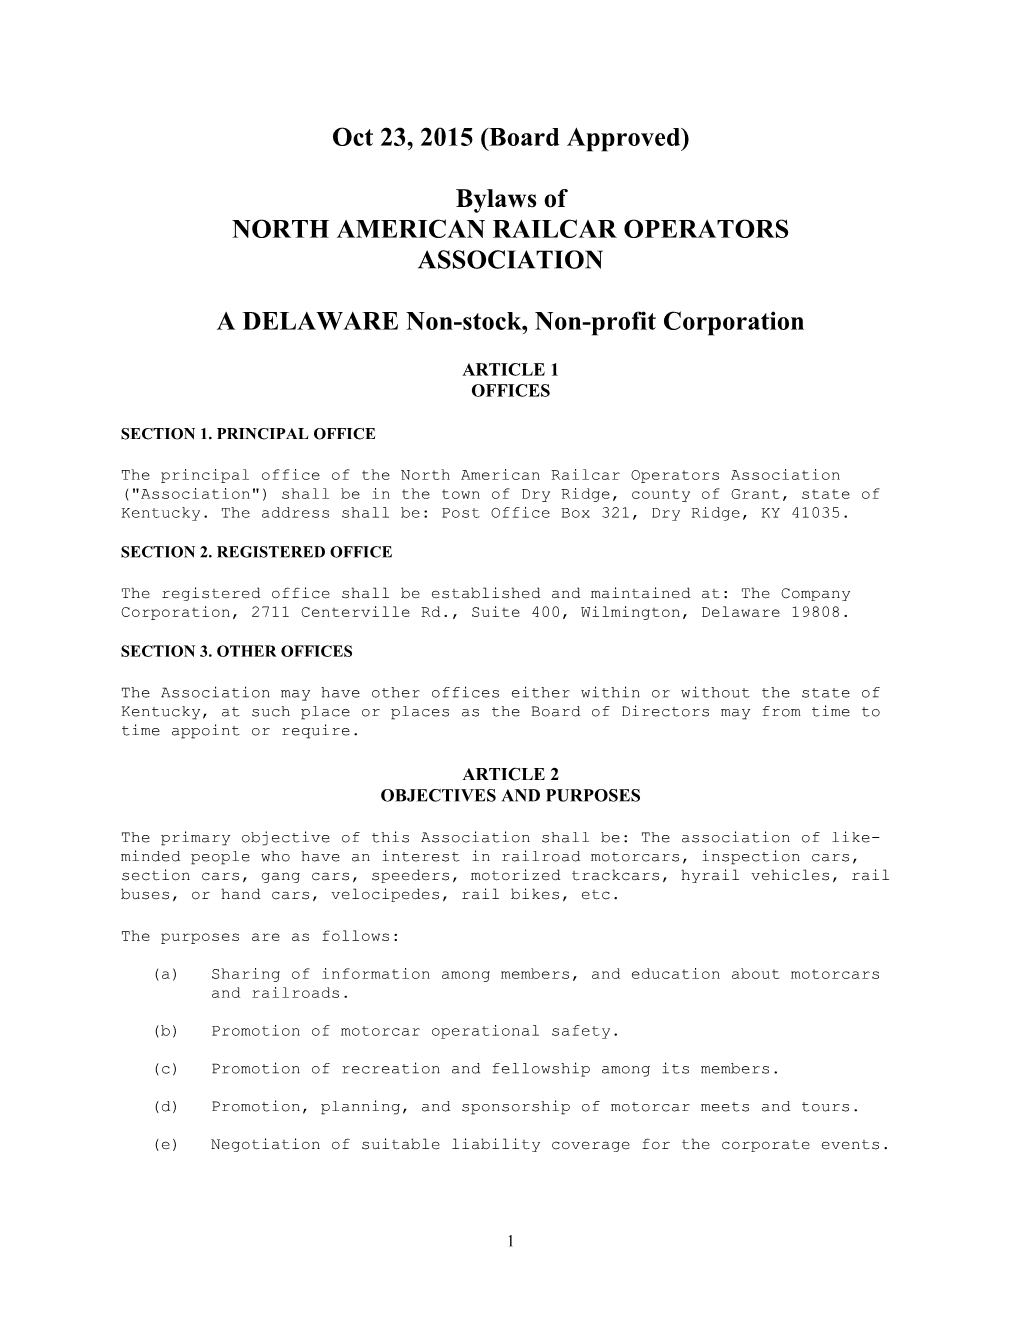 North American Railcar Operators